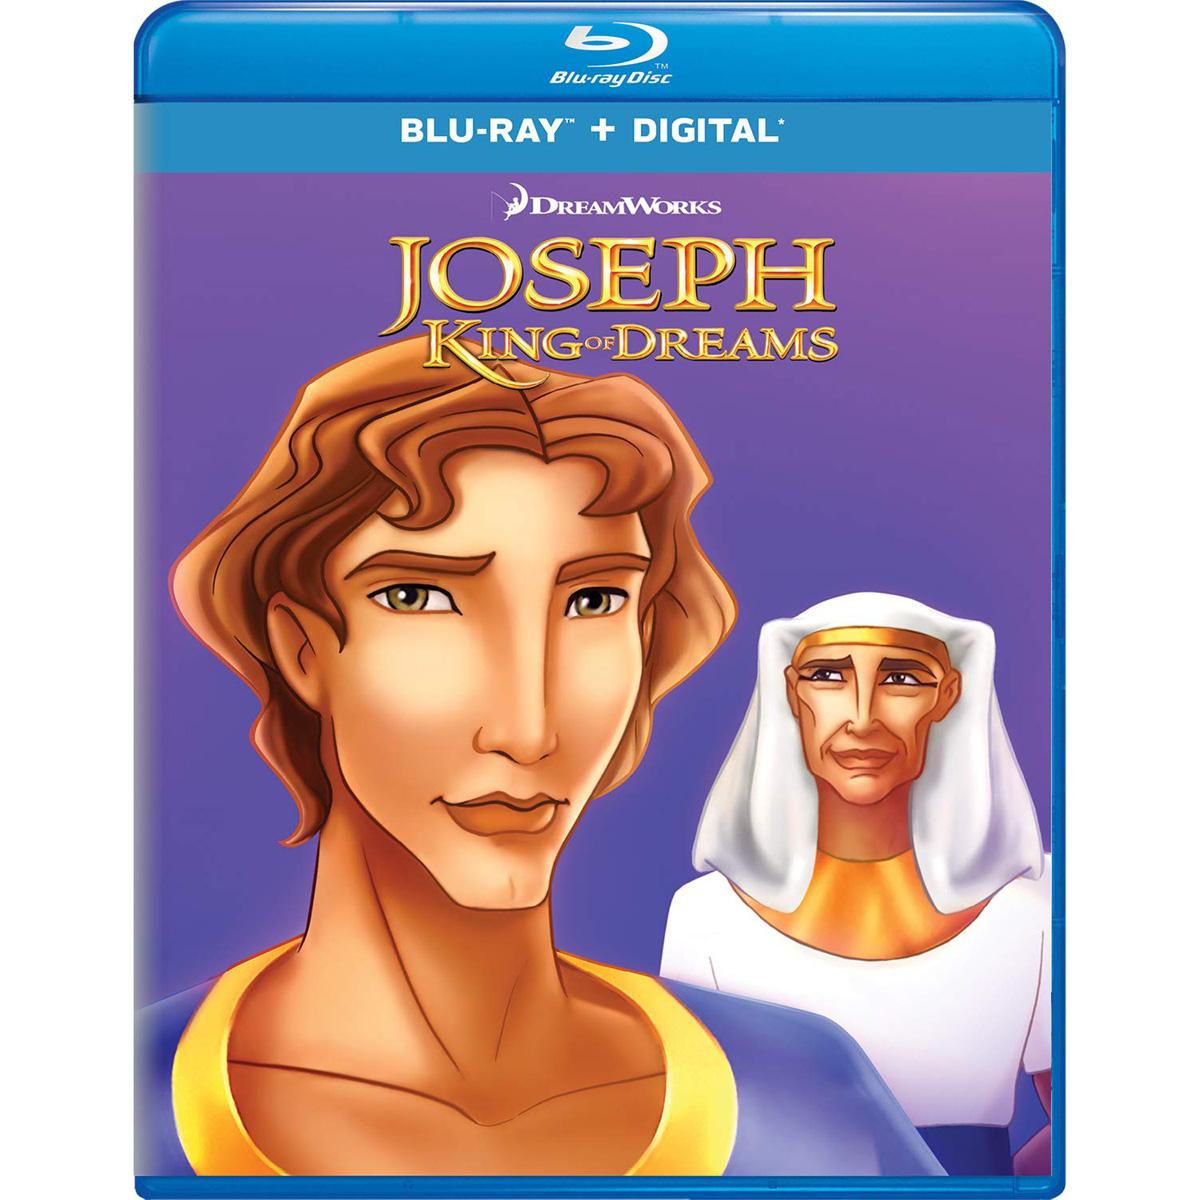 Joseph King of Dreams Blu-ray for $8.61